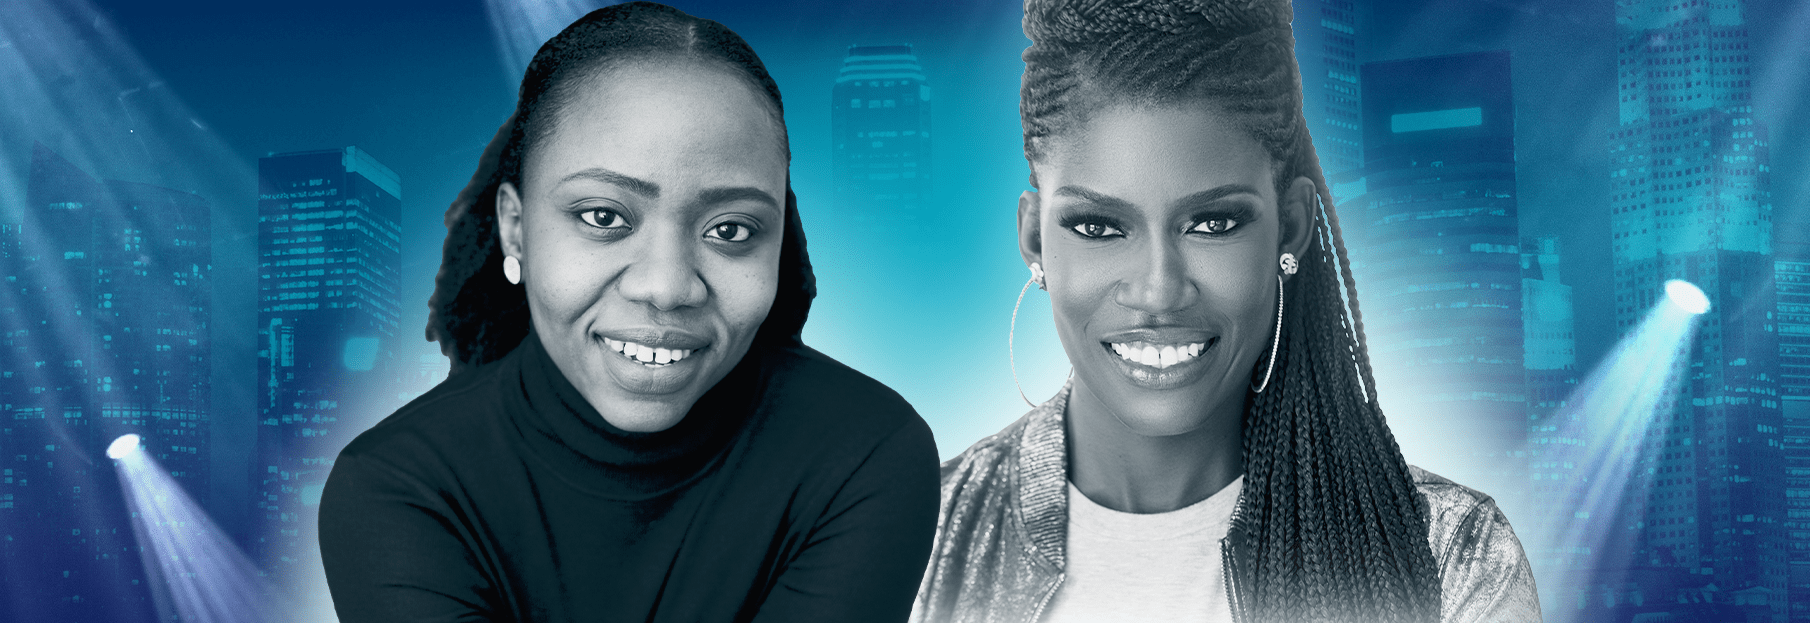 BRAND MINDS LIVE 2020 welcomes two new speakers: Bozoma Saint John and Aduke Onafowokan